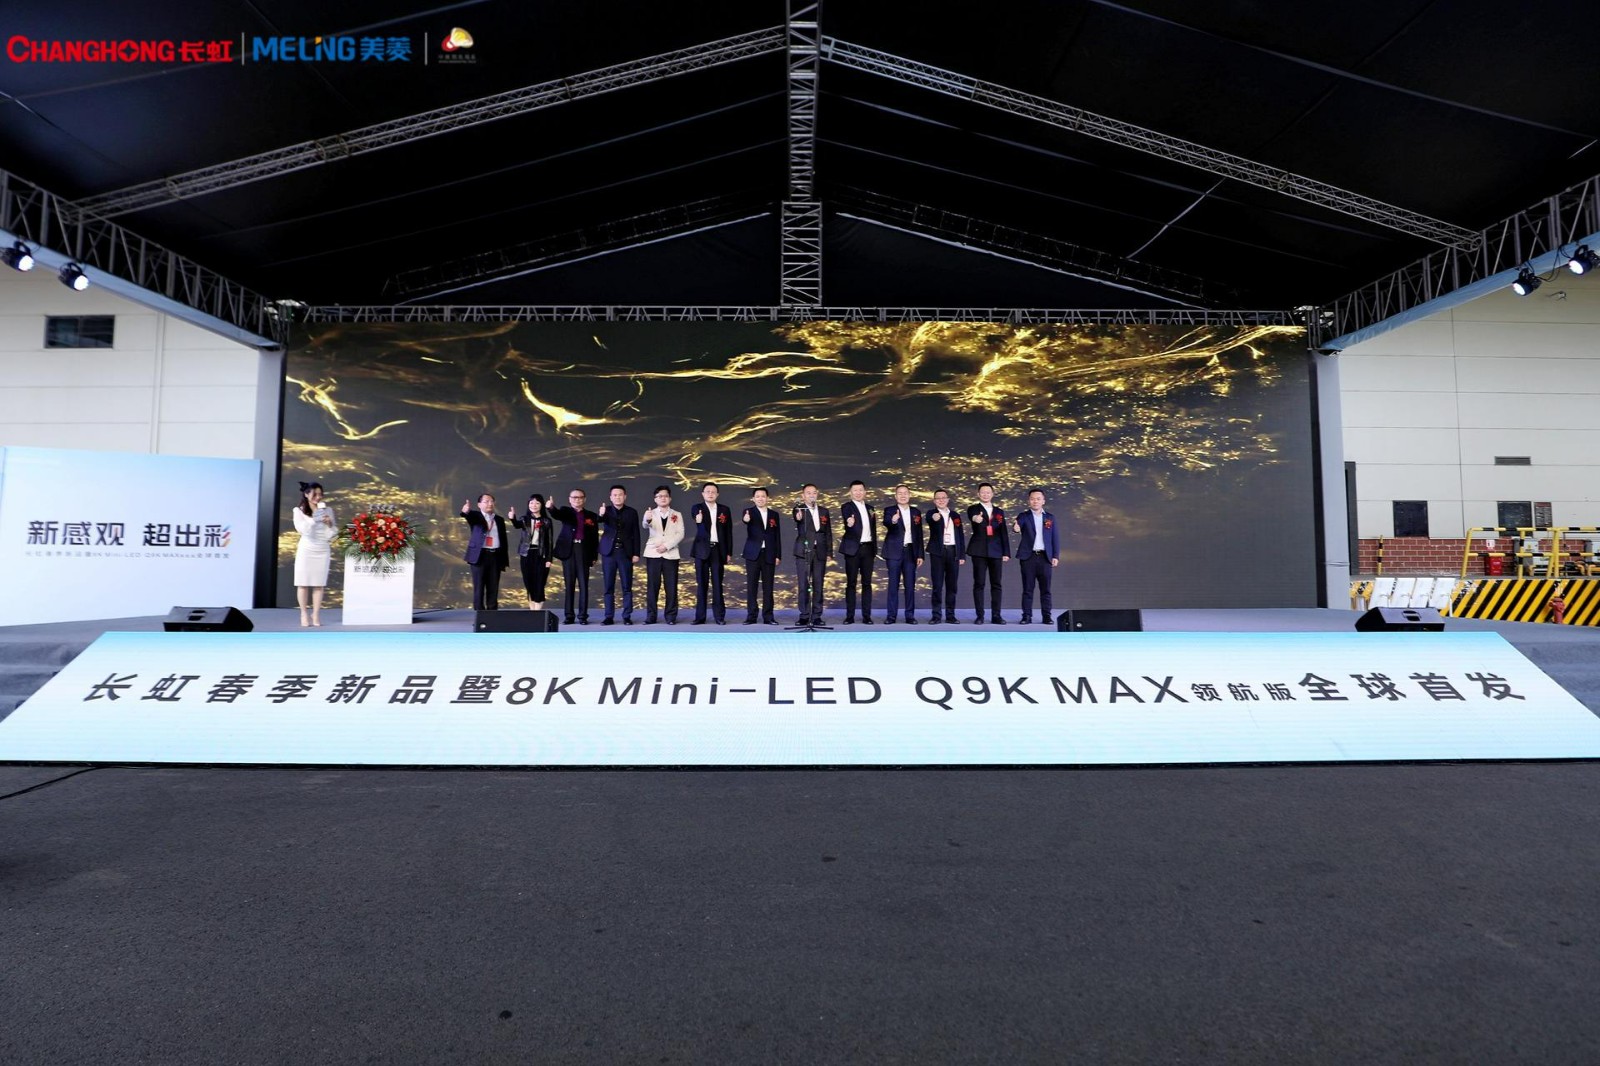 <b>长虹发布中国首款8K高刷Mini-LED电视，持续引领显像技术革命</b>